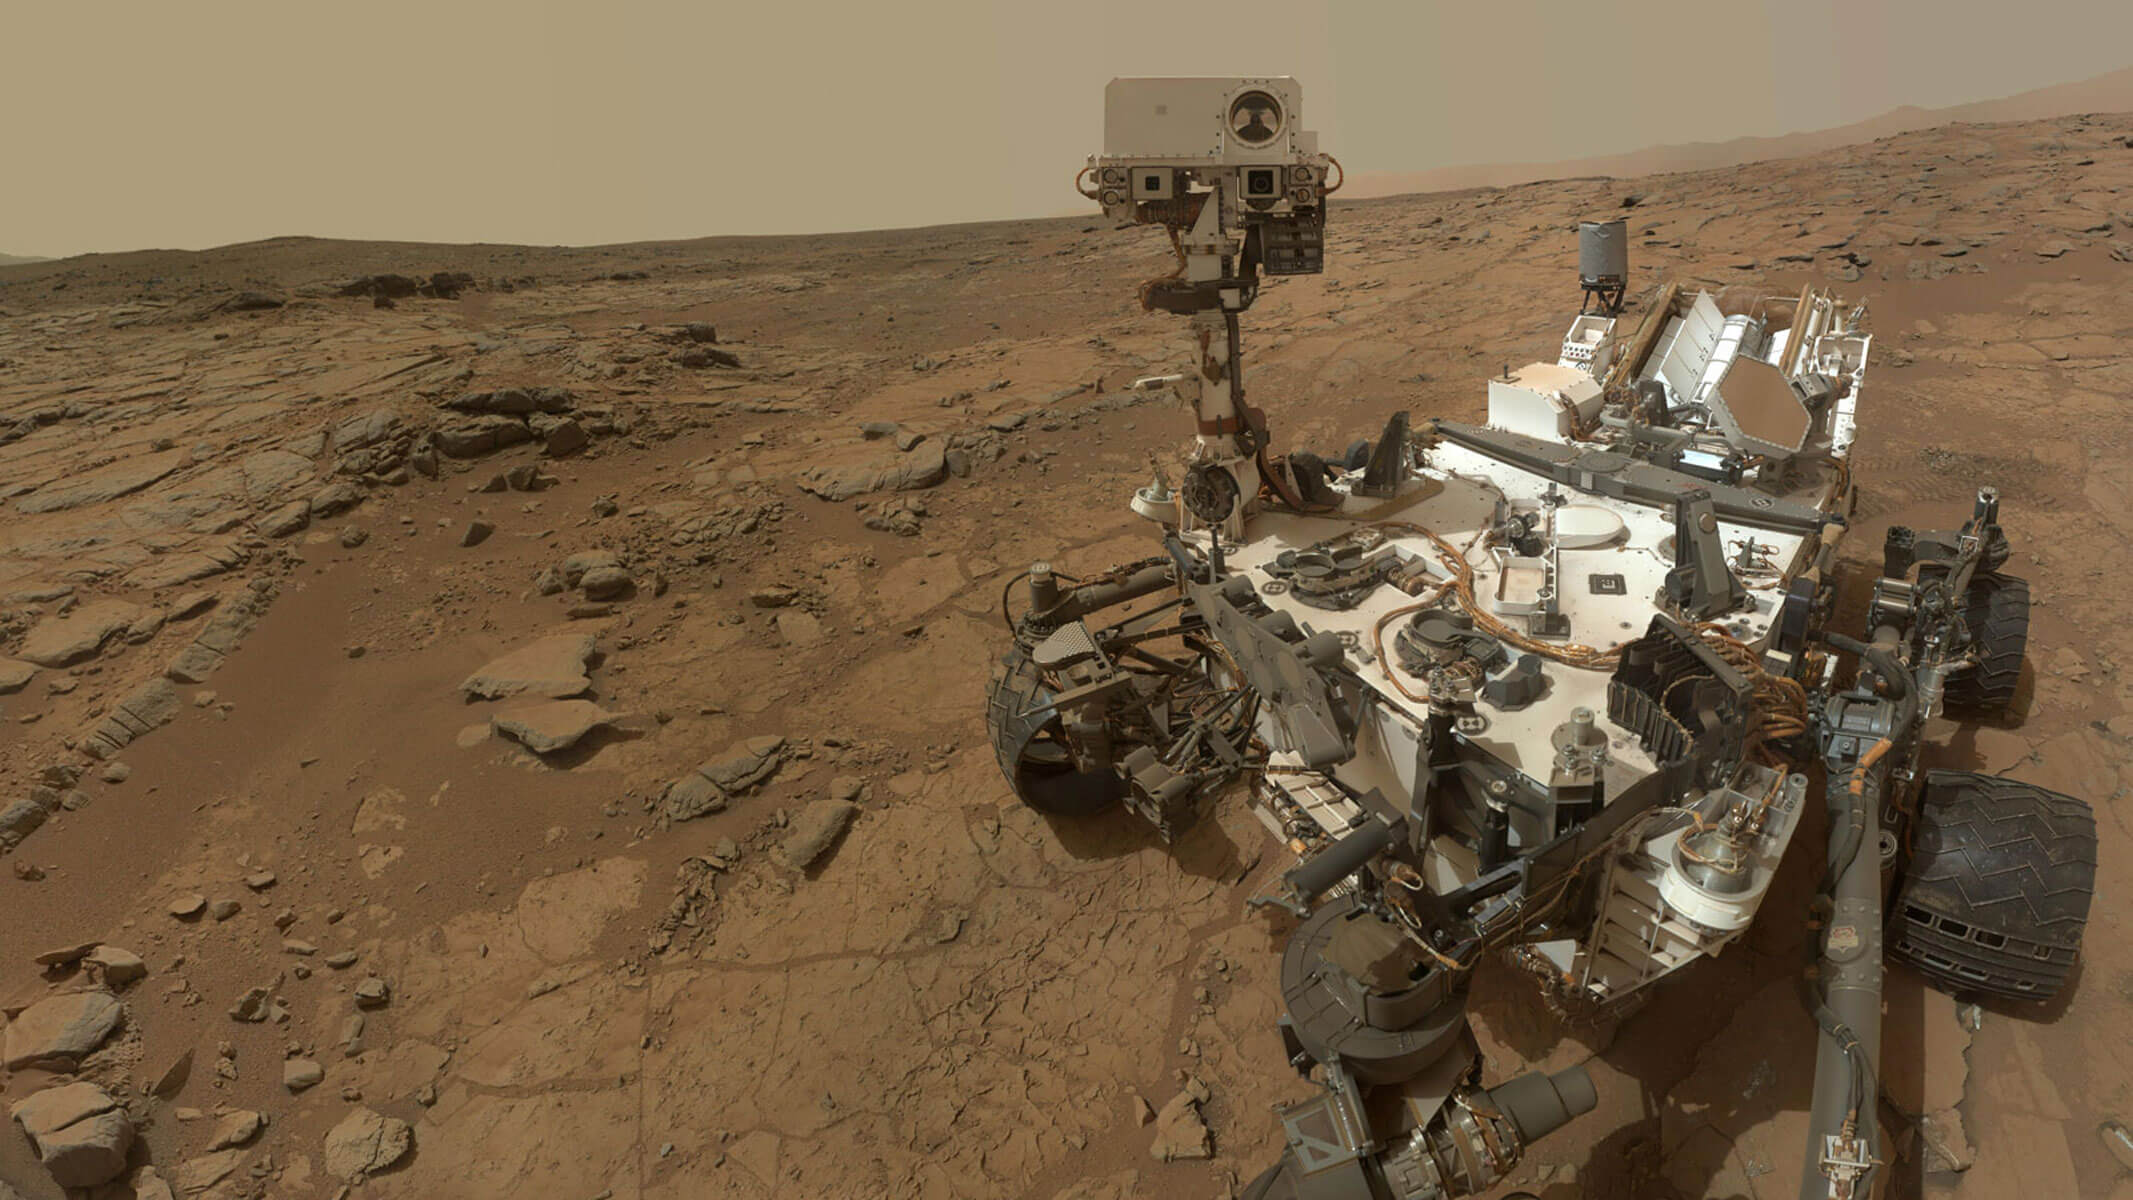 NASA: Ανακάλυψη του “Curiosity” που μπορεί να ανατρέψει τα πάντα! [pic]